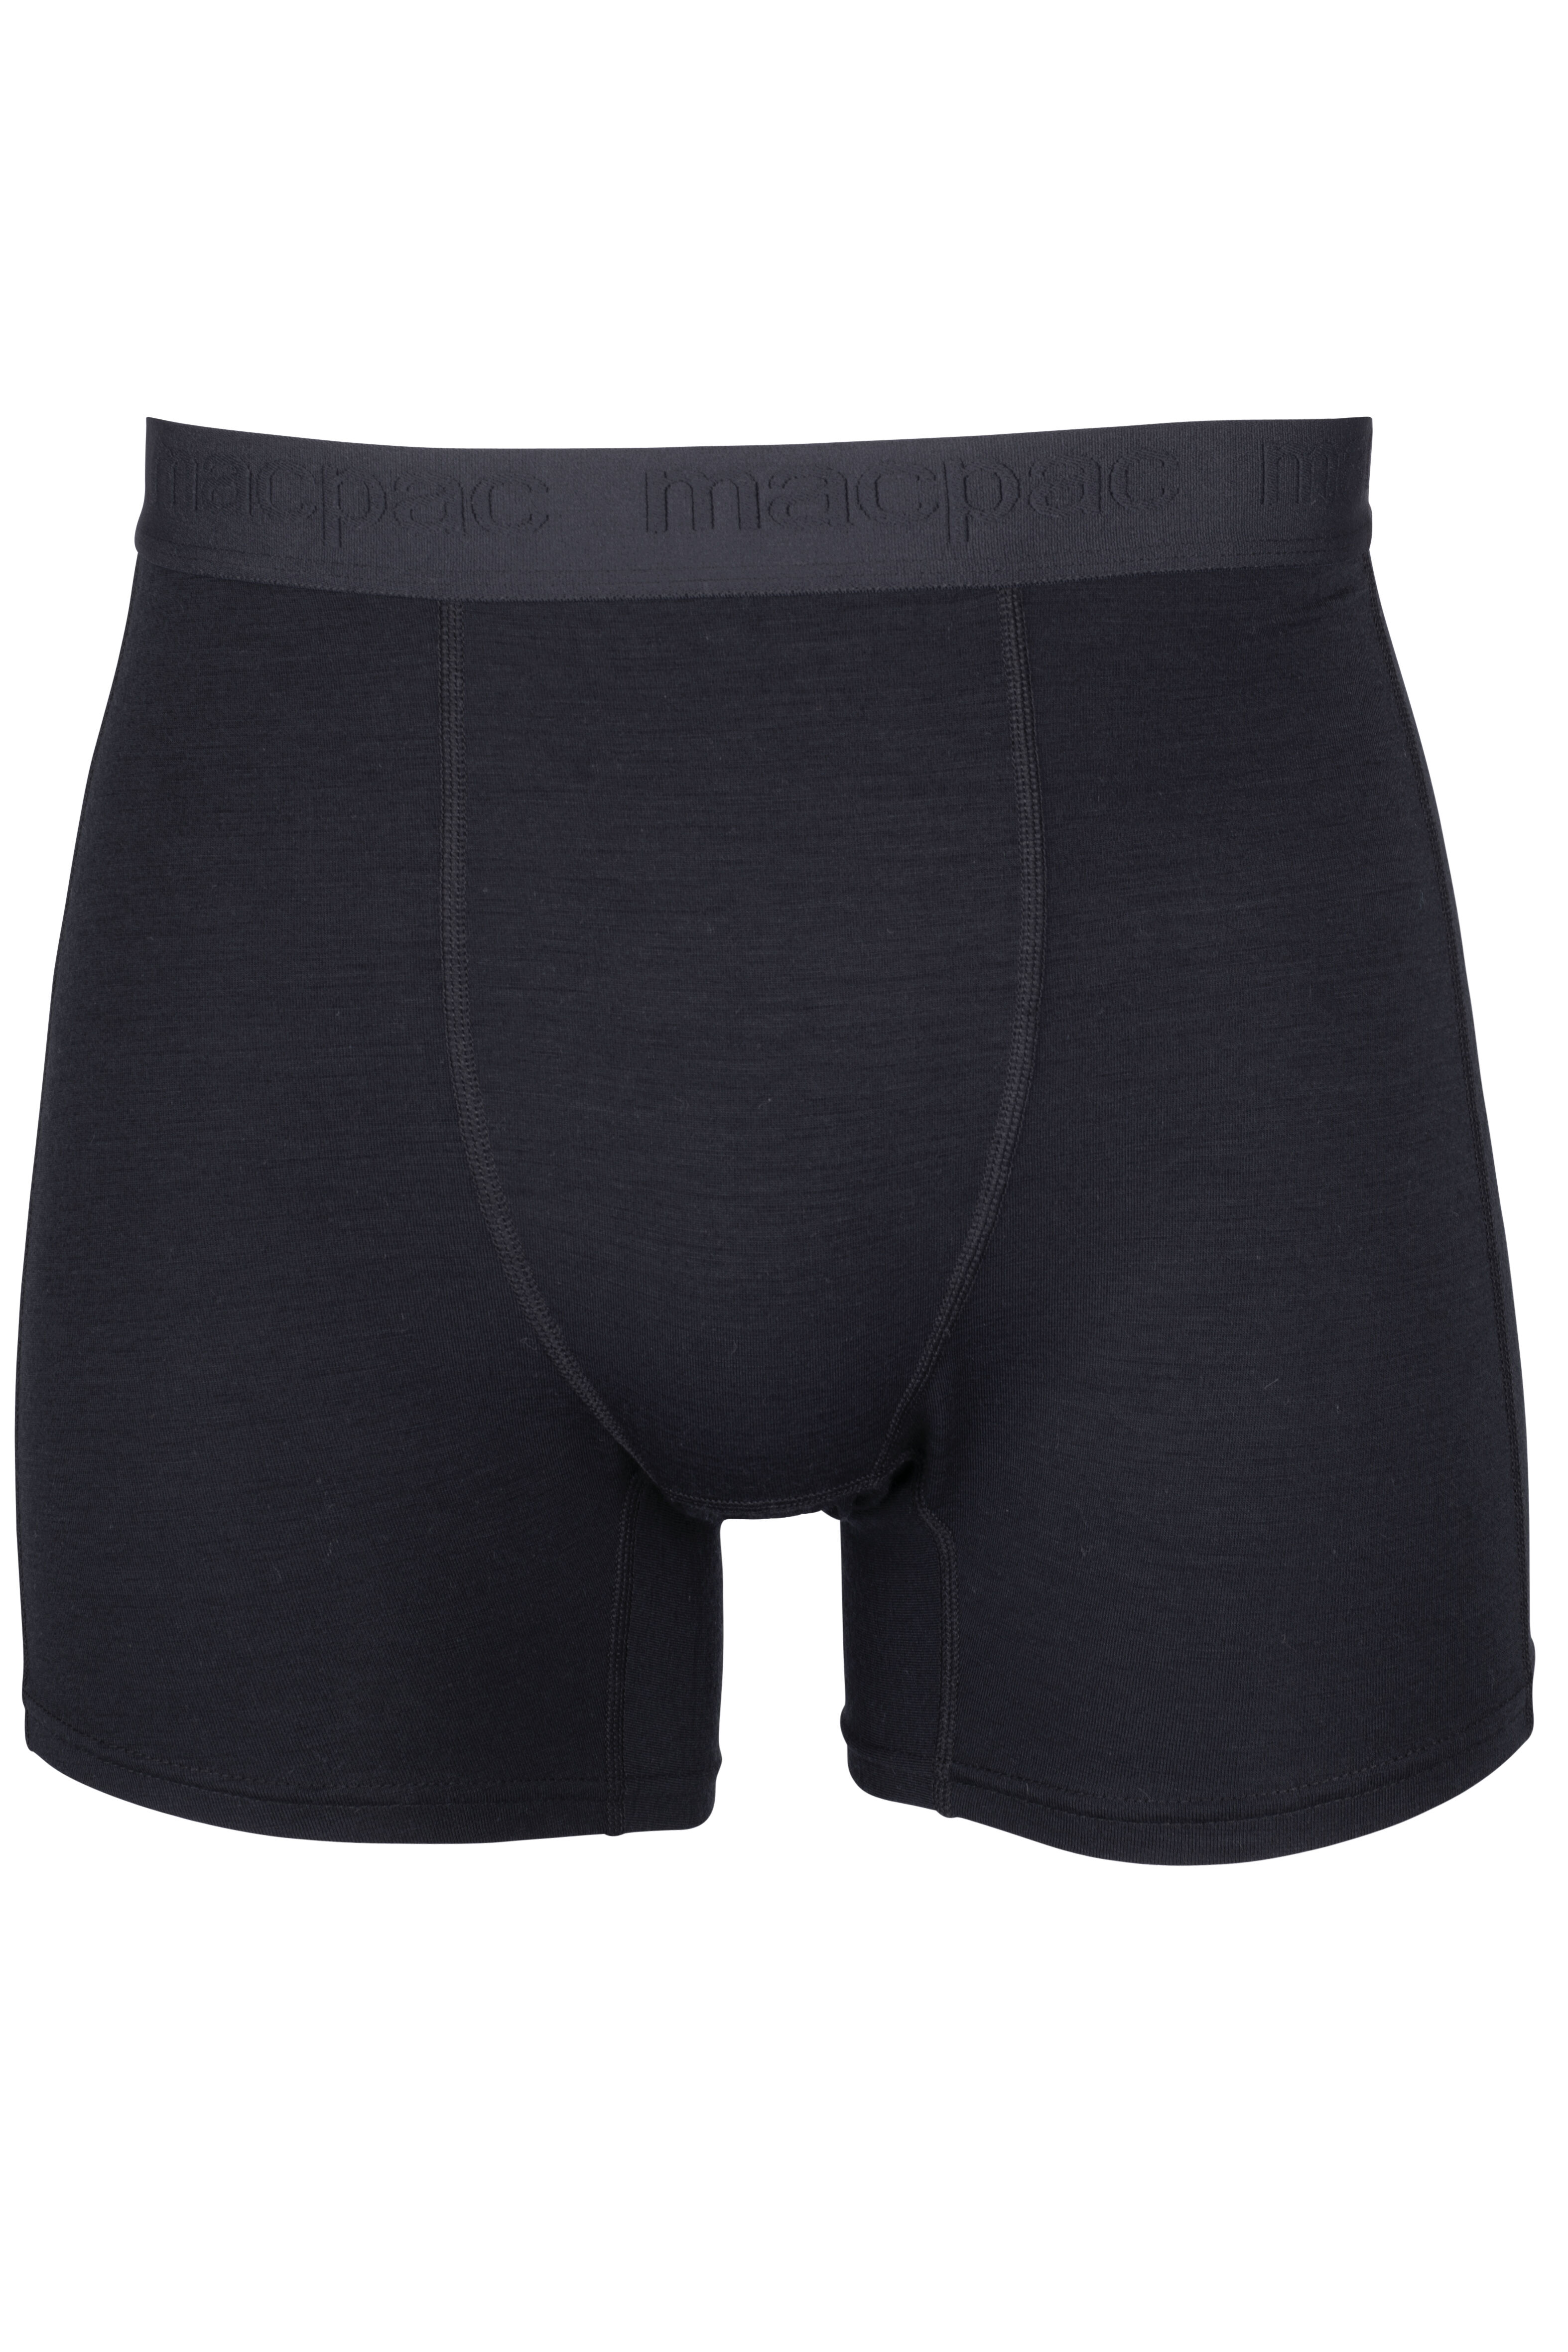 The Most Attractive Underwear for Men